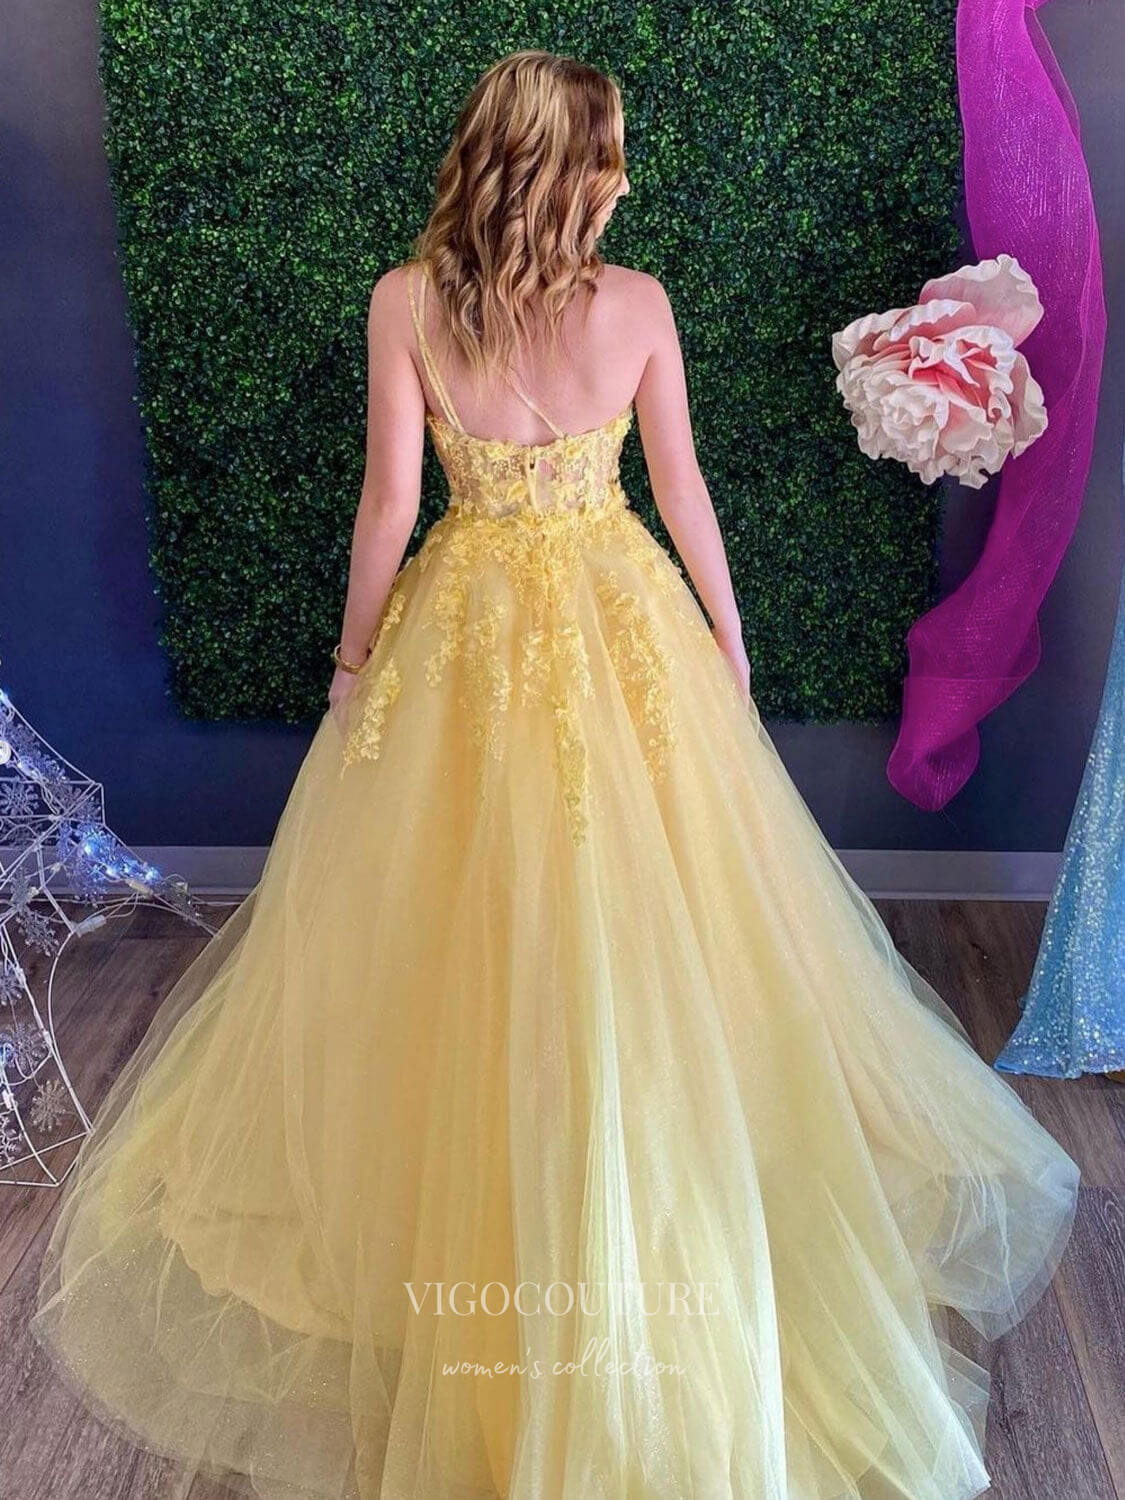 vigocouture-Yellow Lace Applique Prom Dresses One Shoulder Evening Dress 21764-Prom Dresses-vigocouture-